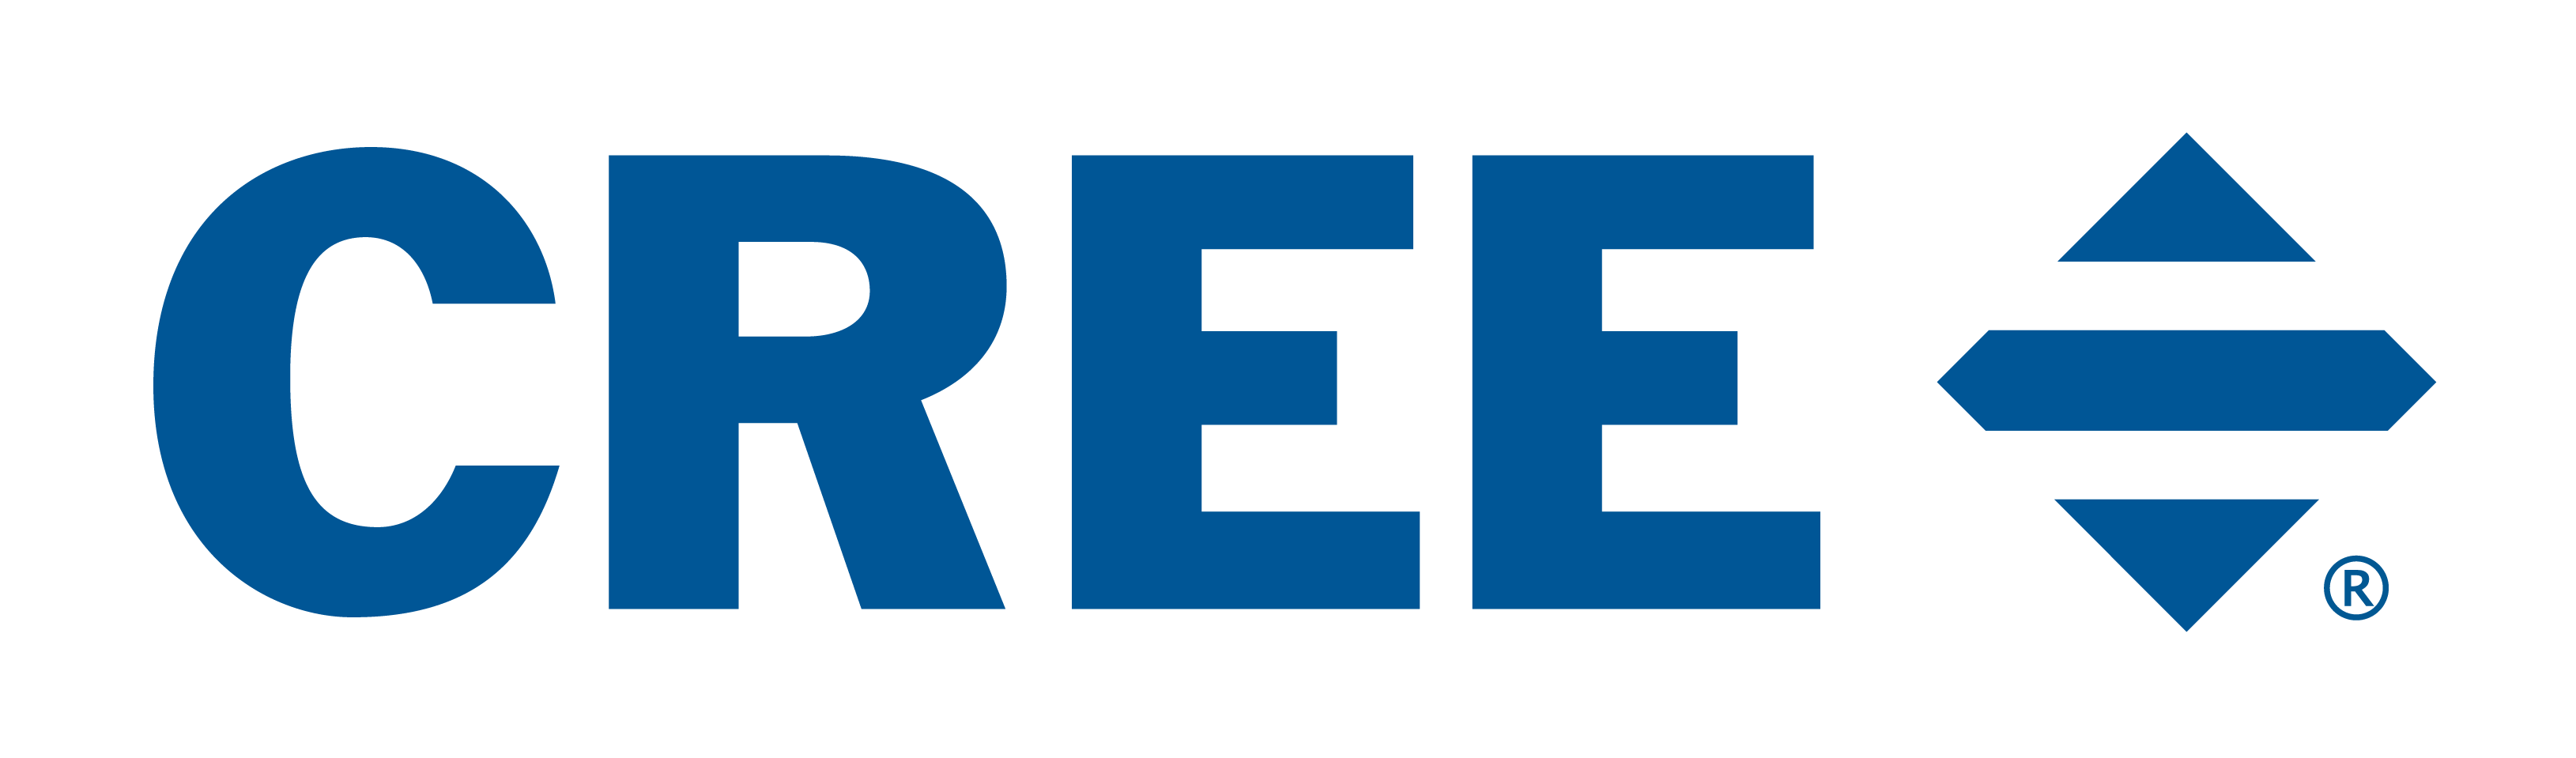 Cree Logo - SiC & GaN Power, RF Solutions and LED Technology | Cree, Inc